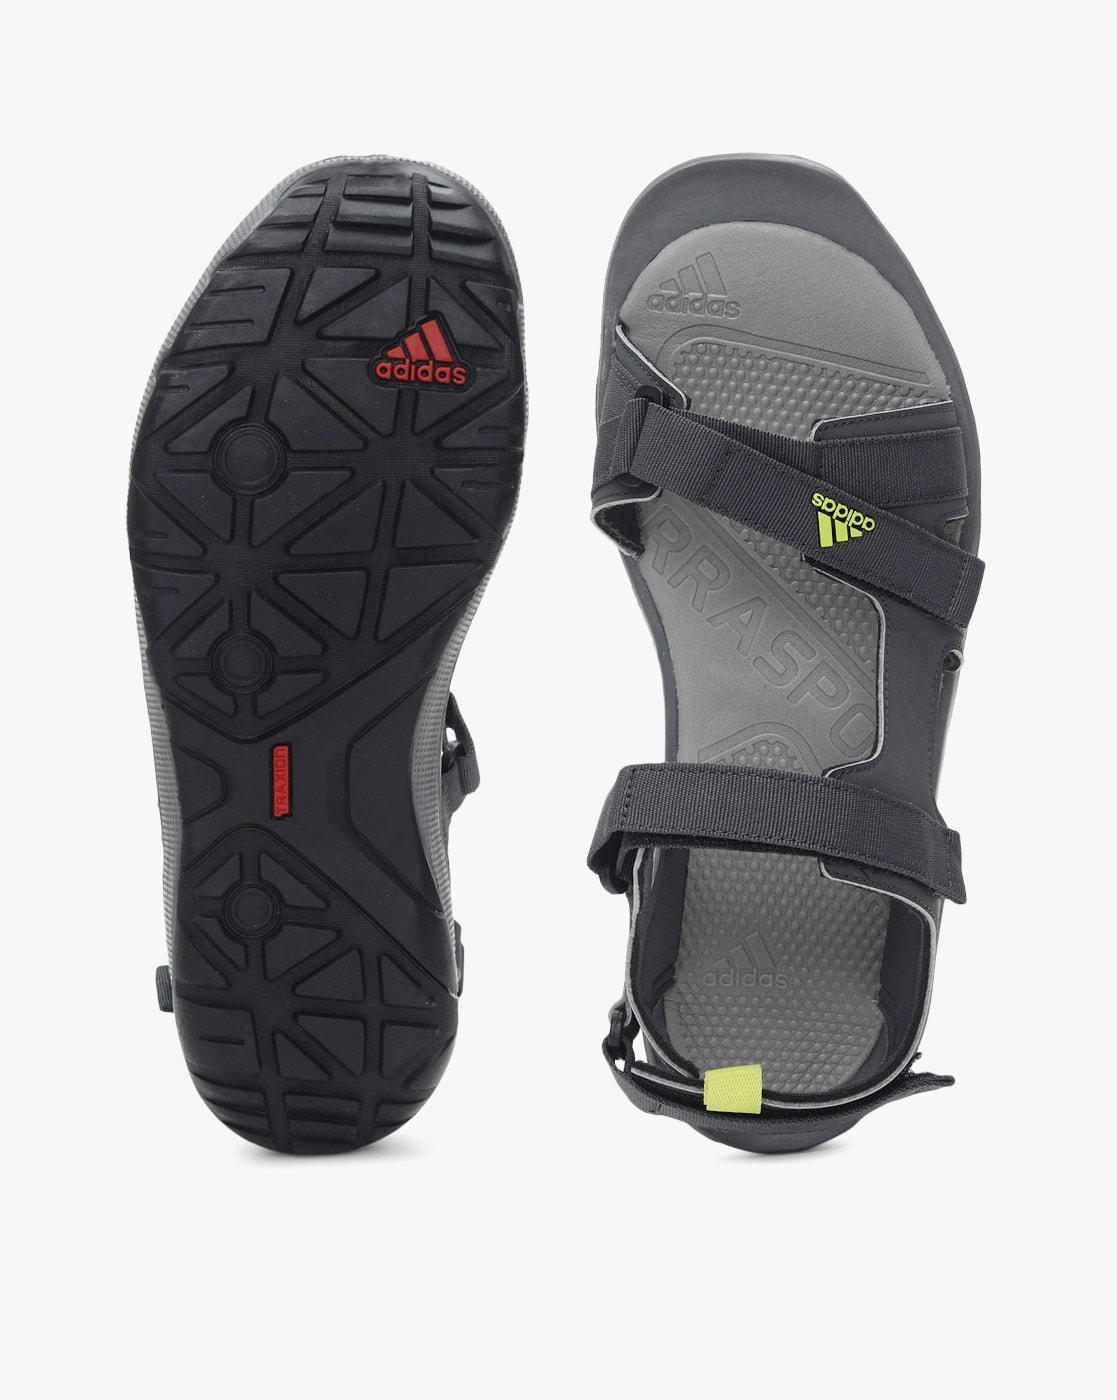 adidas terra sport sandals